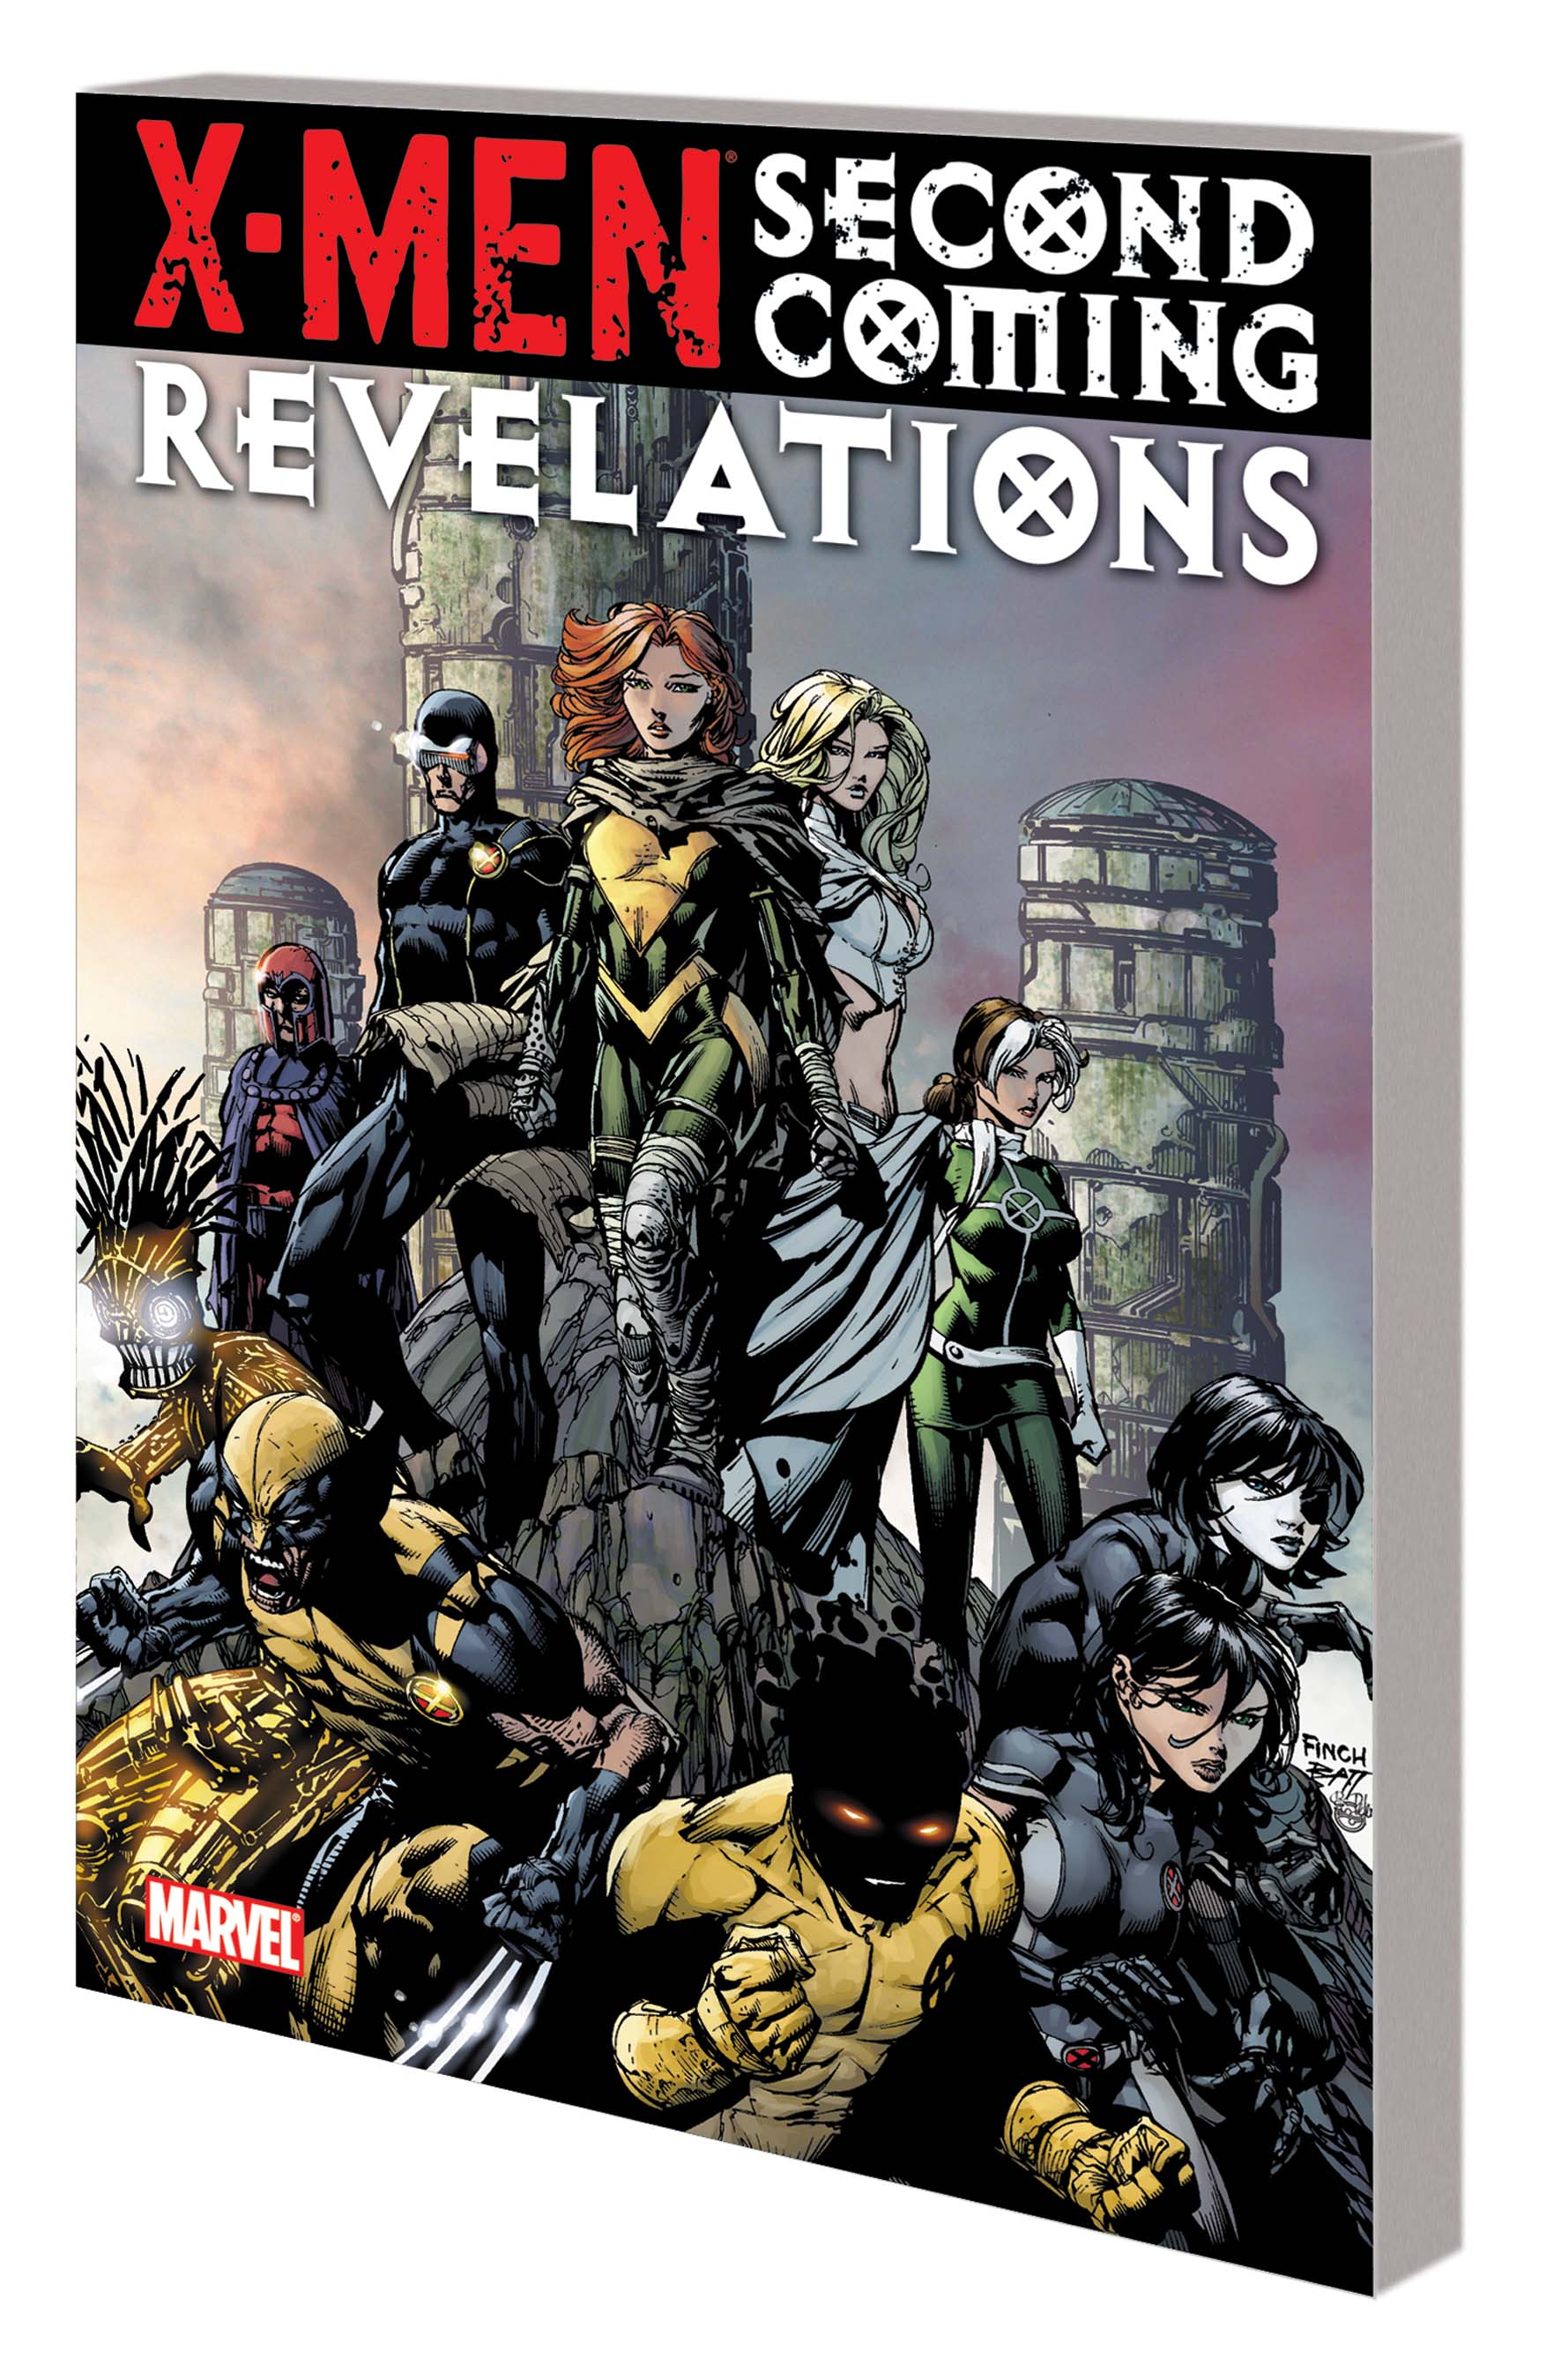 X-Men: Second Coming Revelations (Trade Paperback)